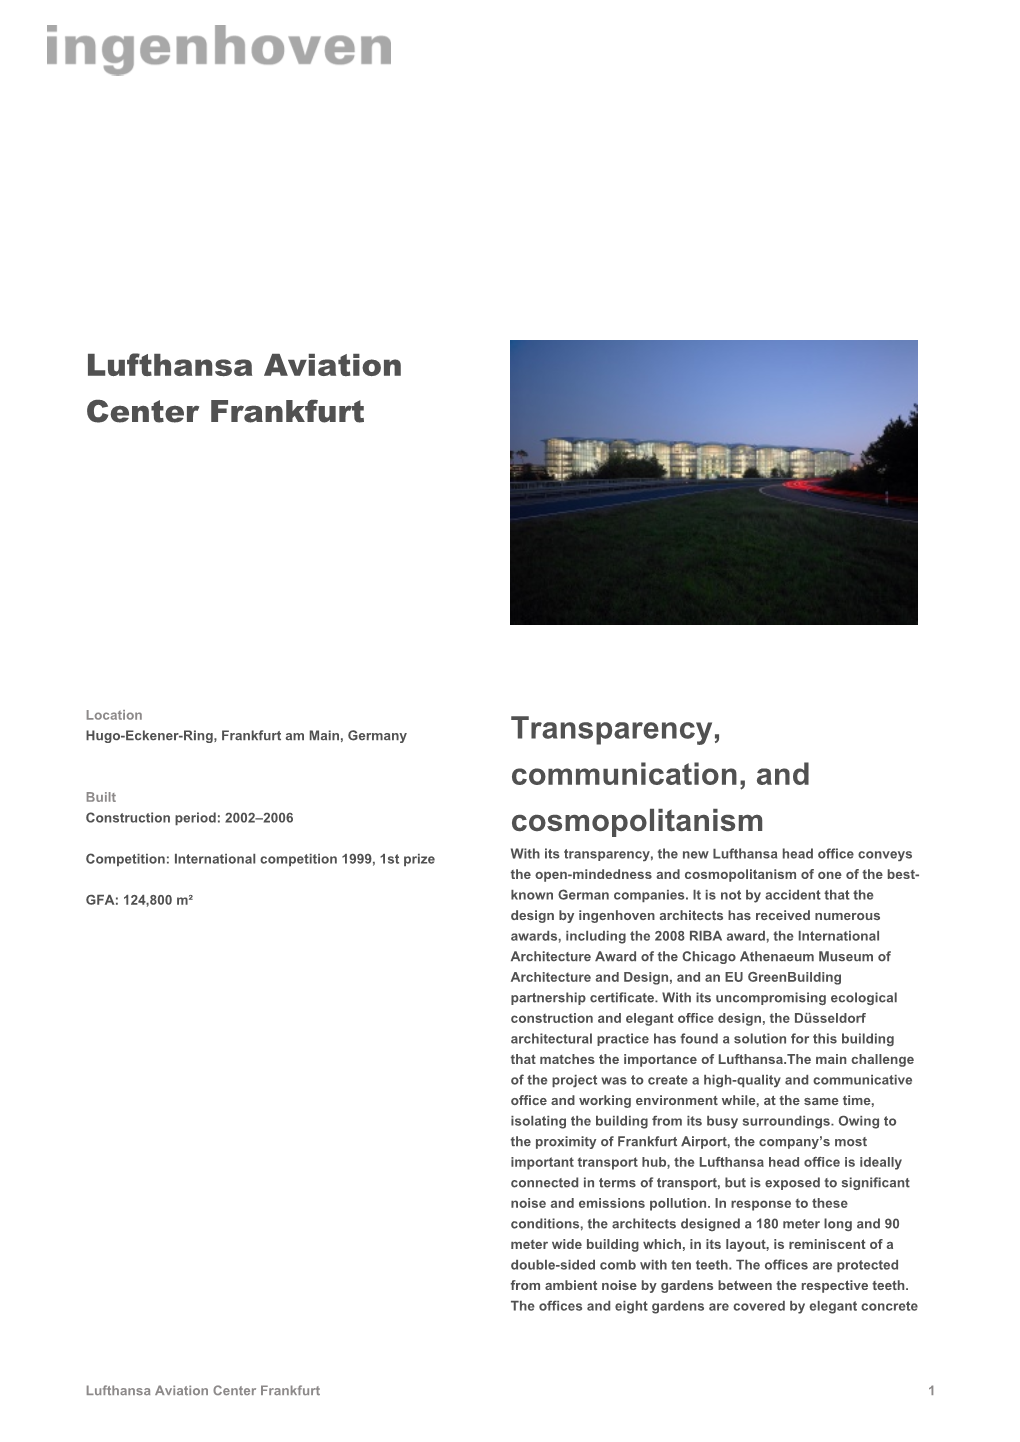 Lufthansa Aviation Center Frankfurt Transparency, Communication, And